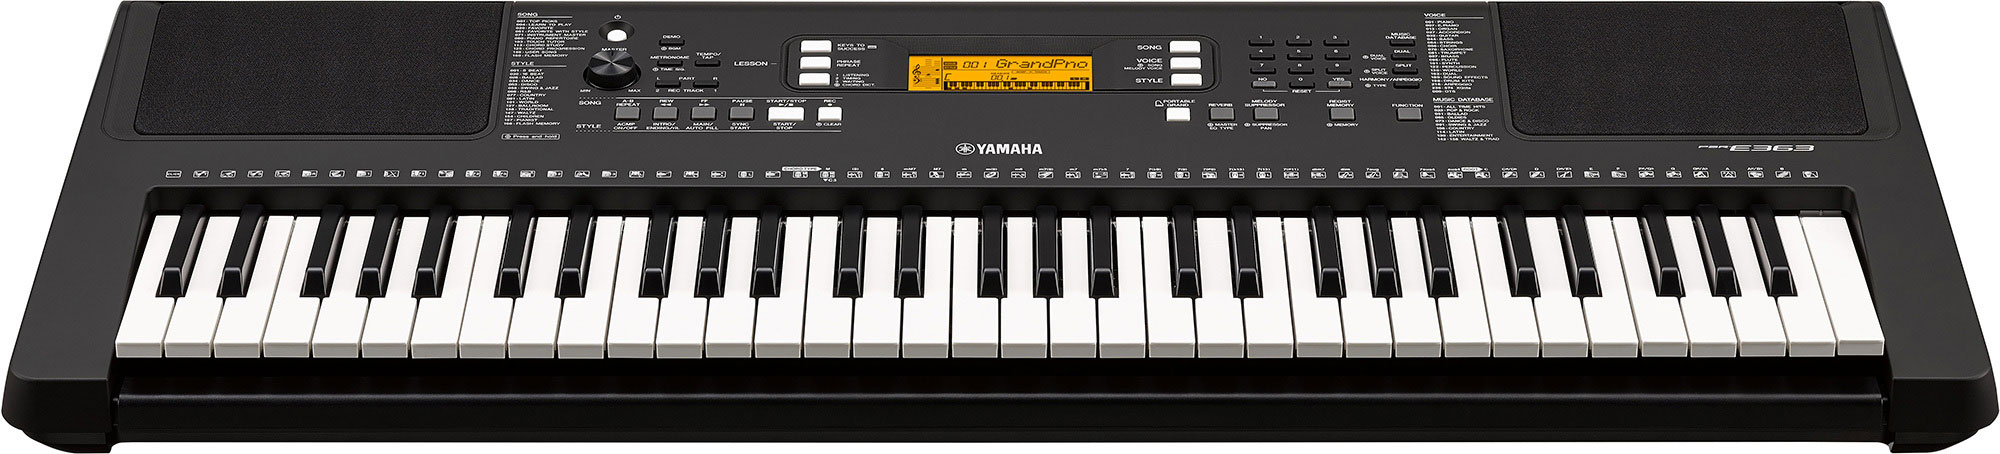 Yamaha Psr-e363 - - Teclado de entertainer / Arreglista - Variation 1